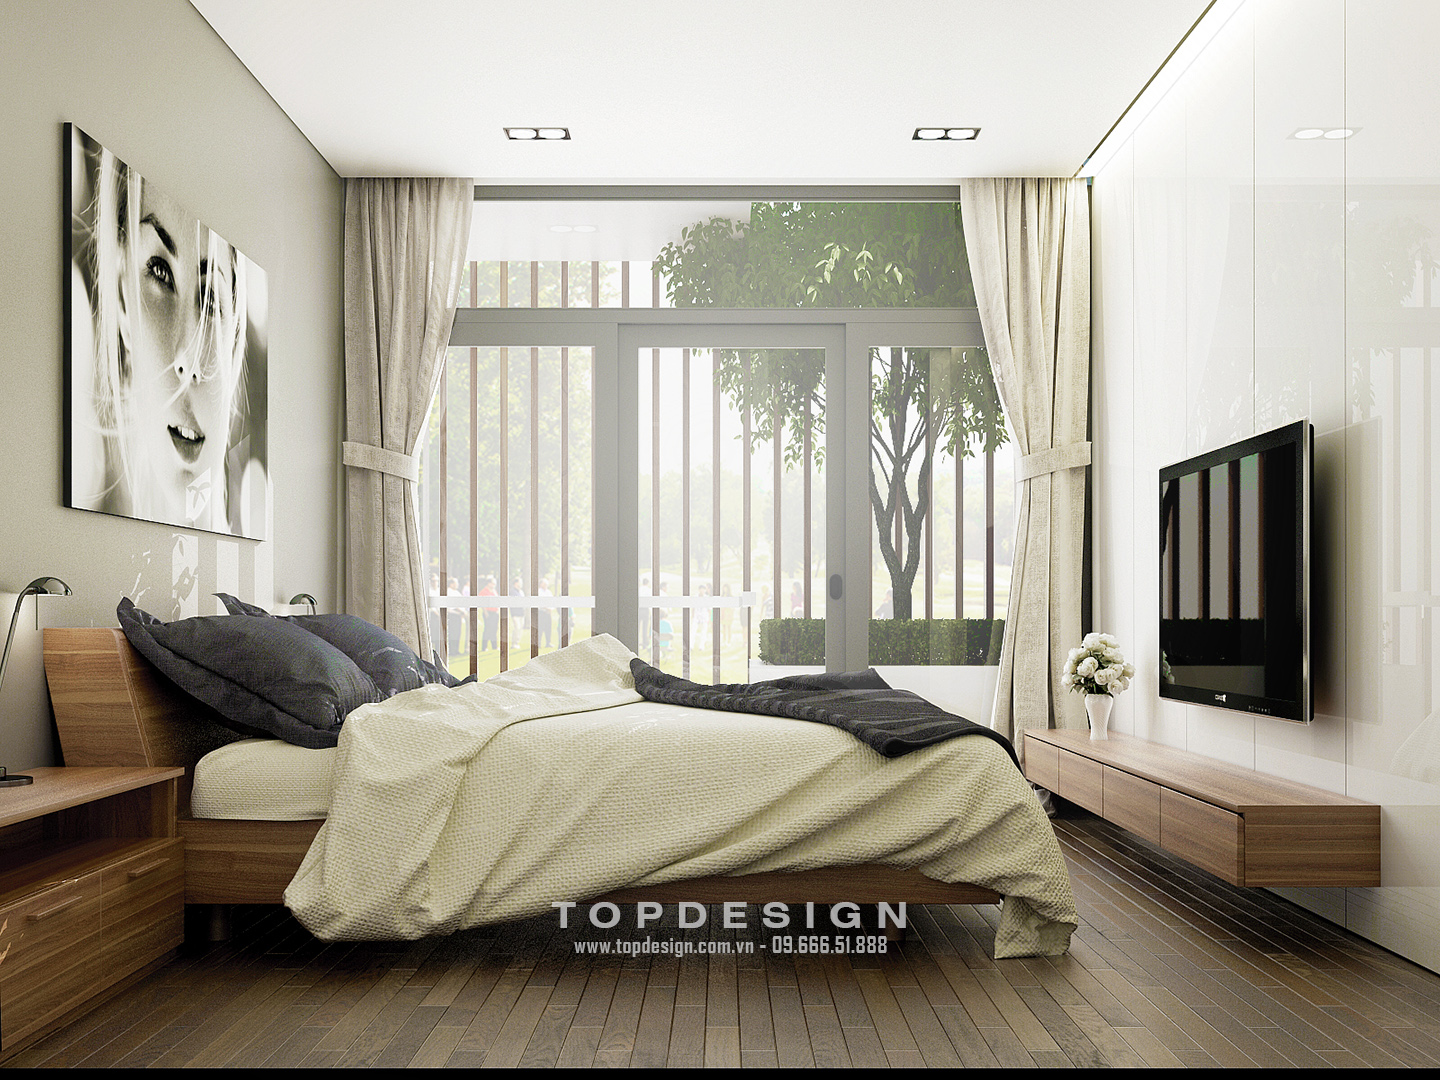 TOPdesign_Thiet ke_Noi that_Ngoai Giao Doan_Thon Loc_07 mẫu nội thất phòng ngủ